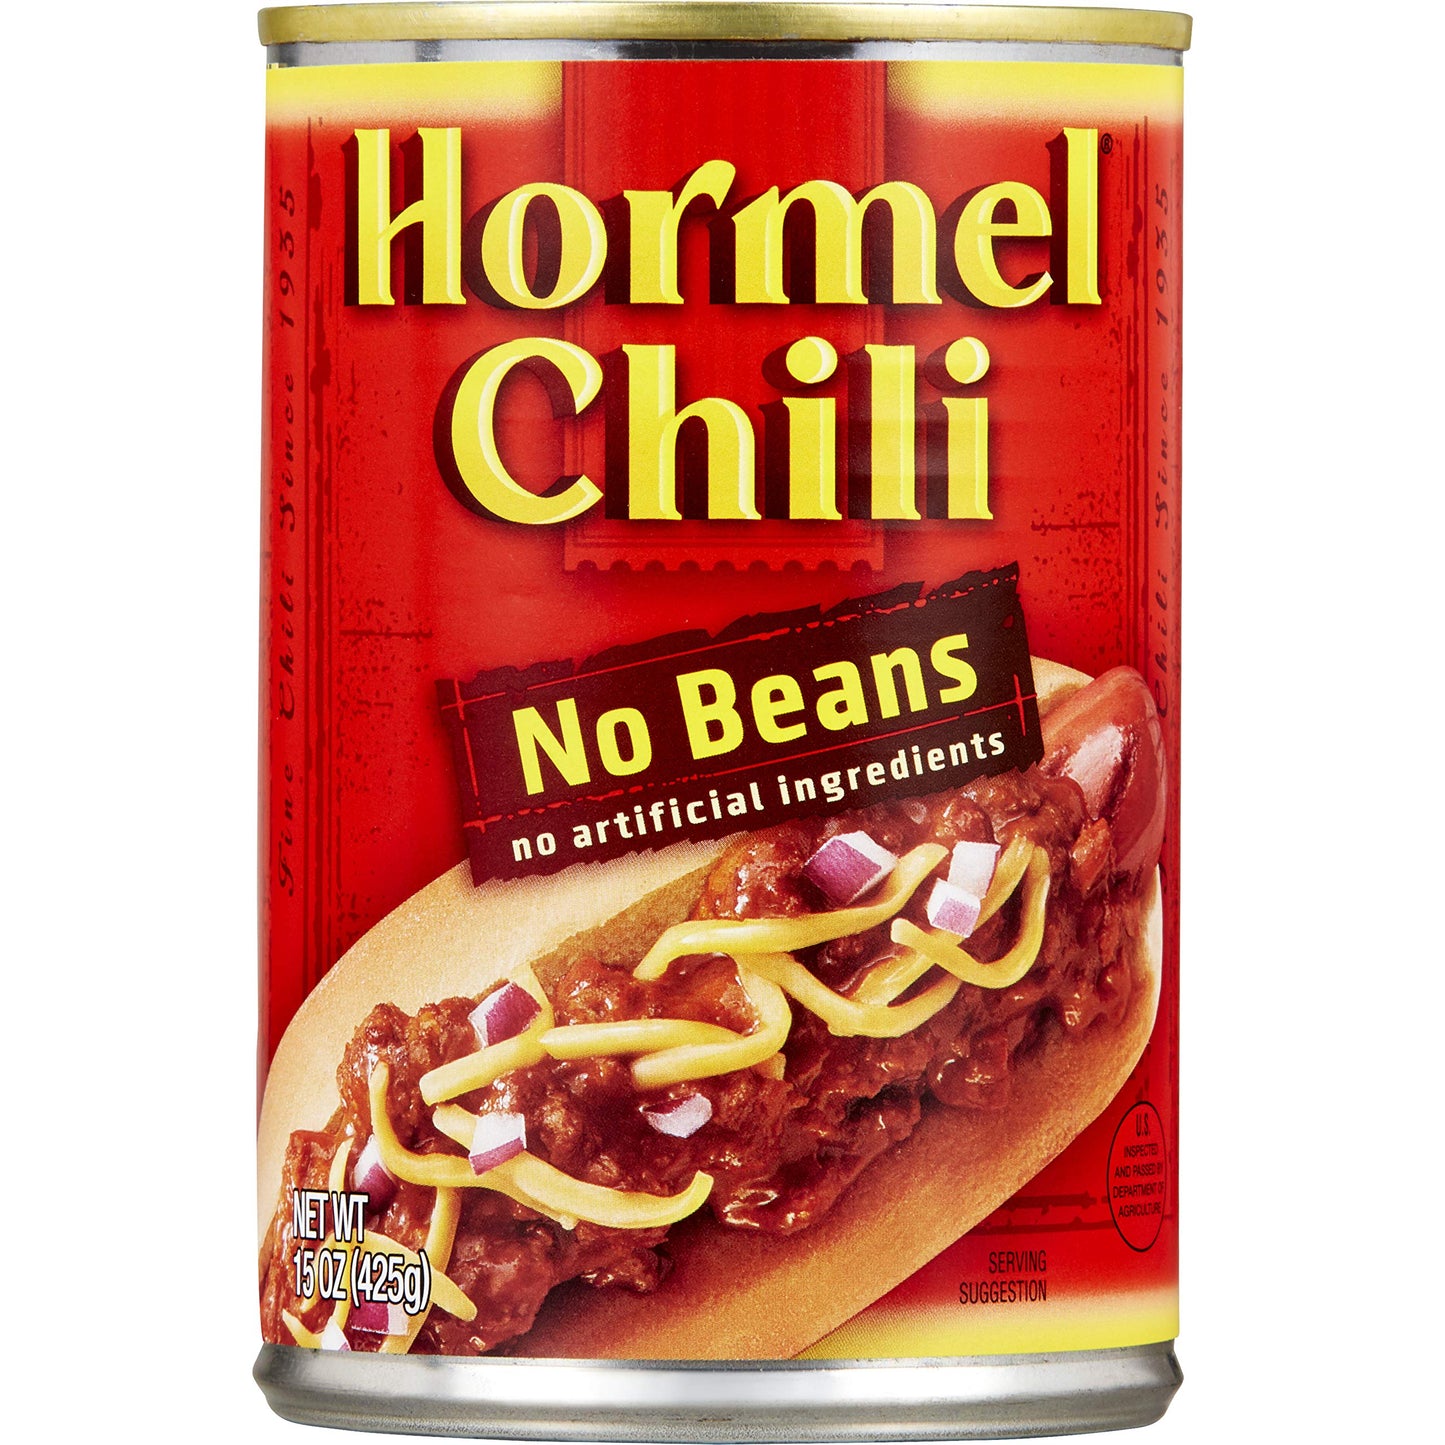 Hormel Chili No Beans 15oz 12 Count